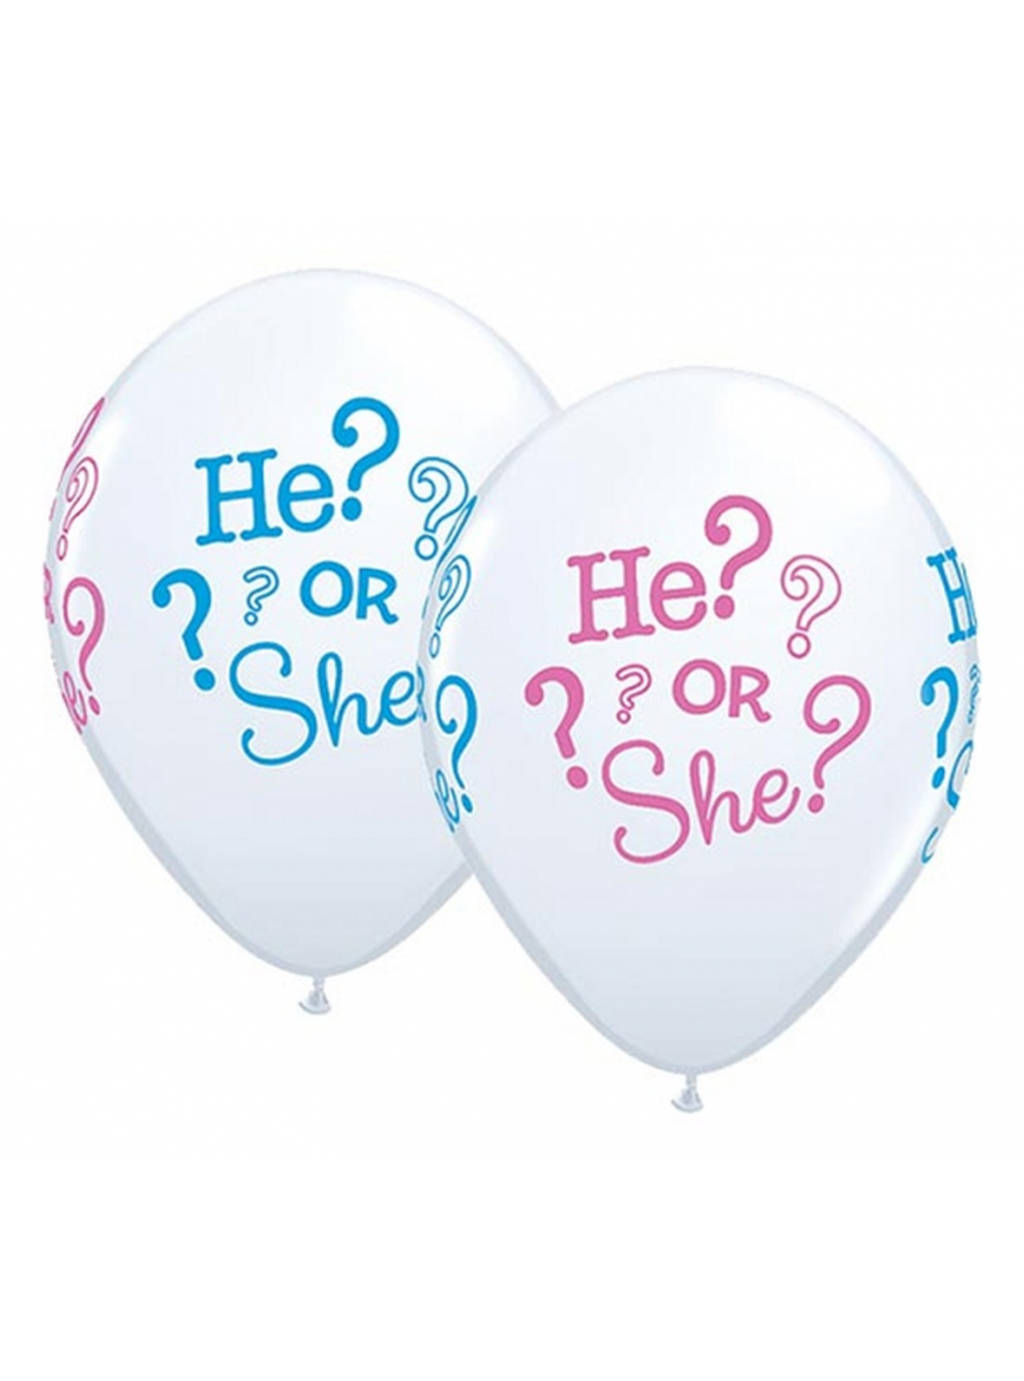 Balon "He or She?" - biały z napisami